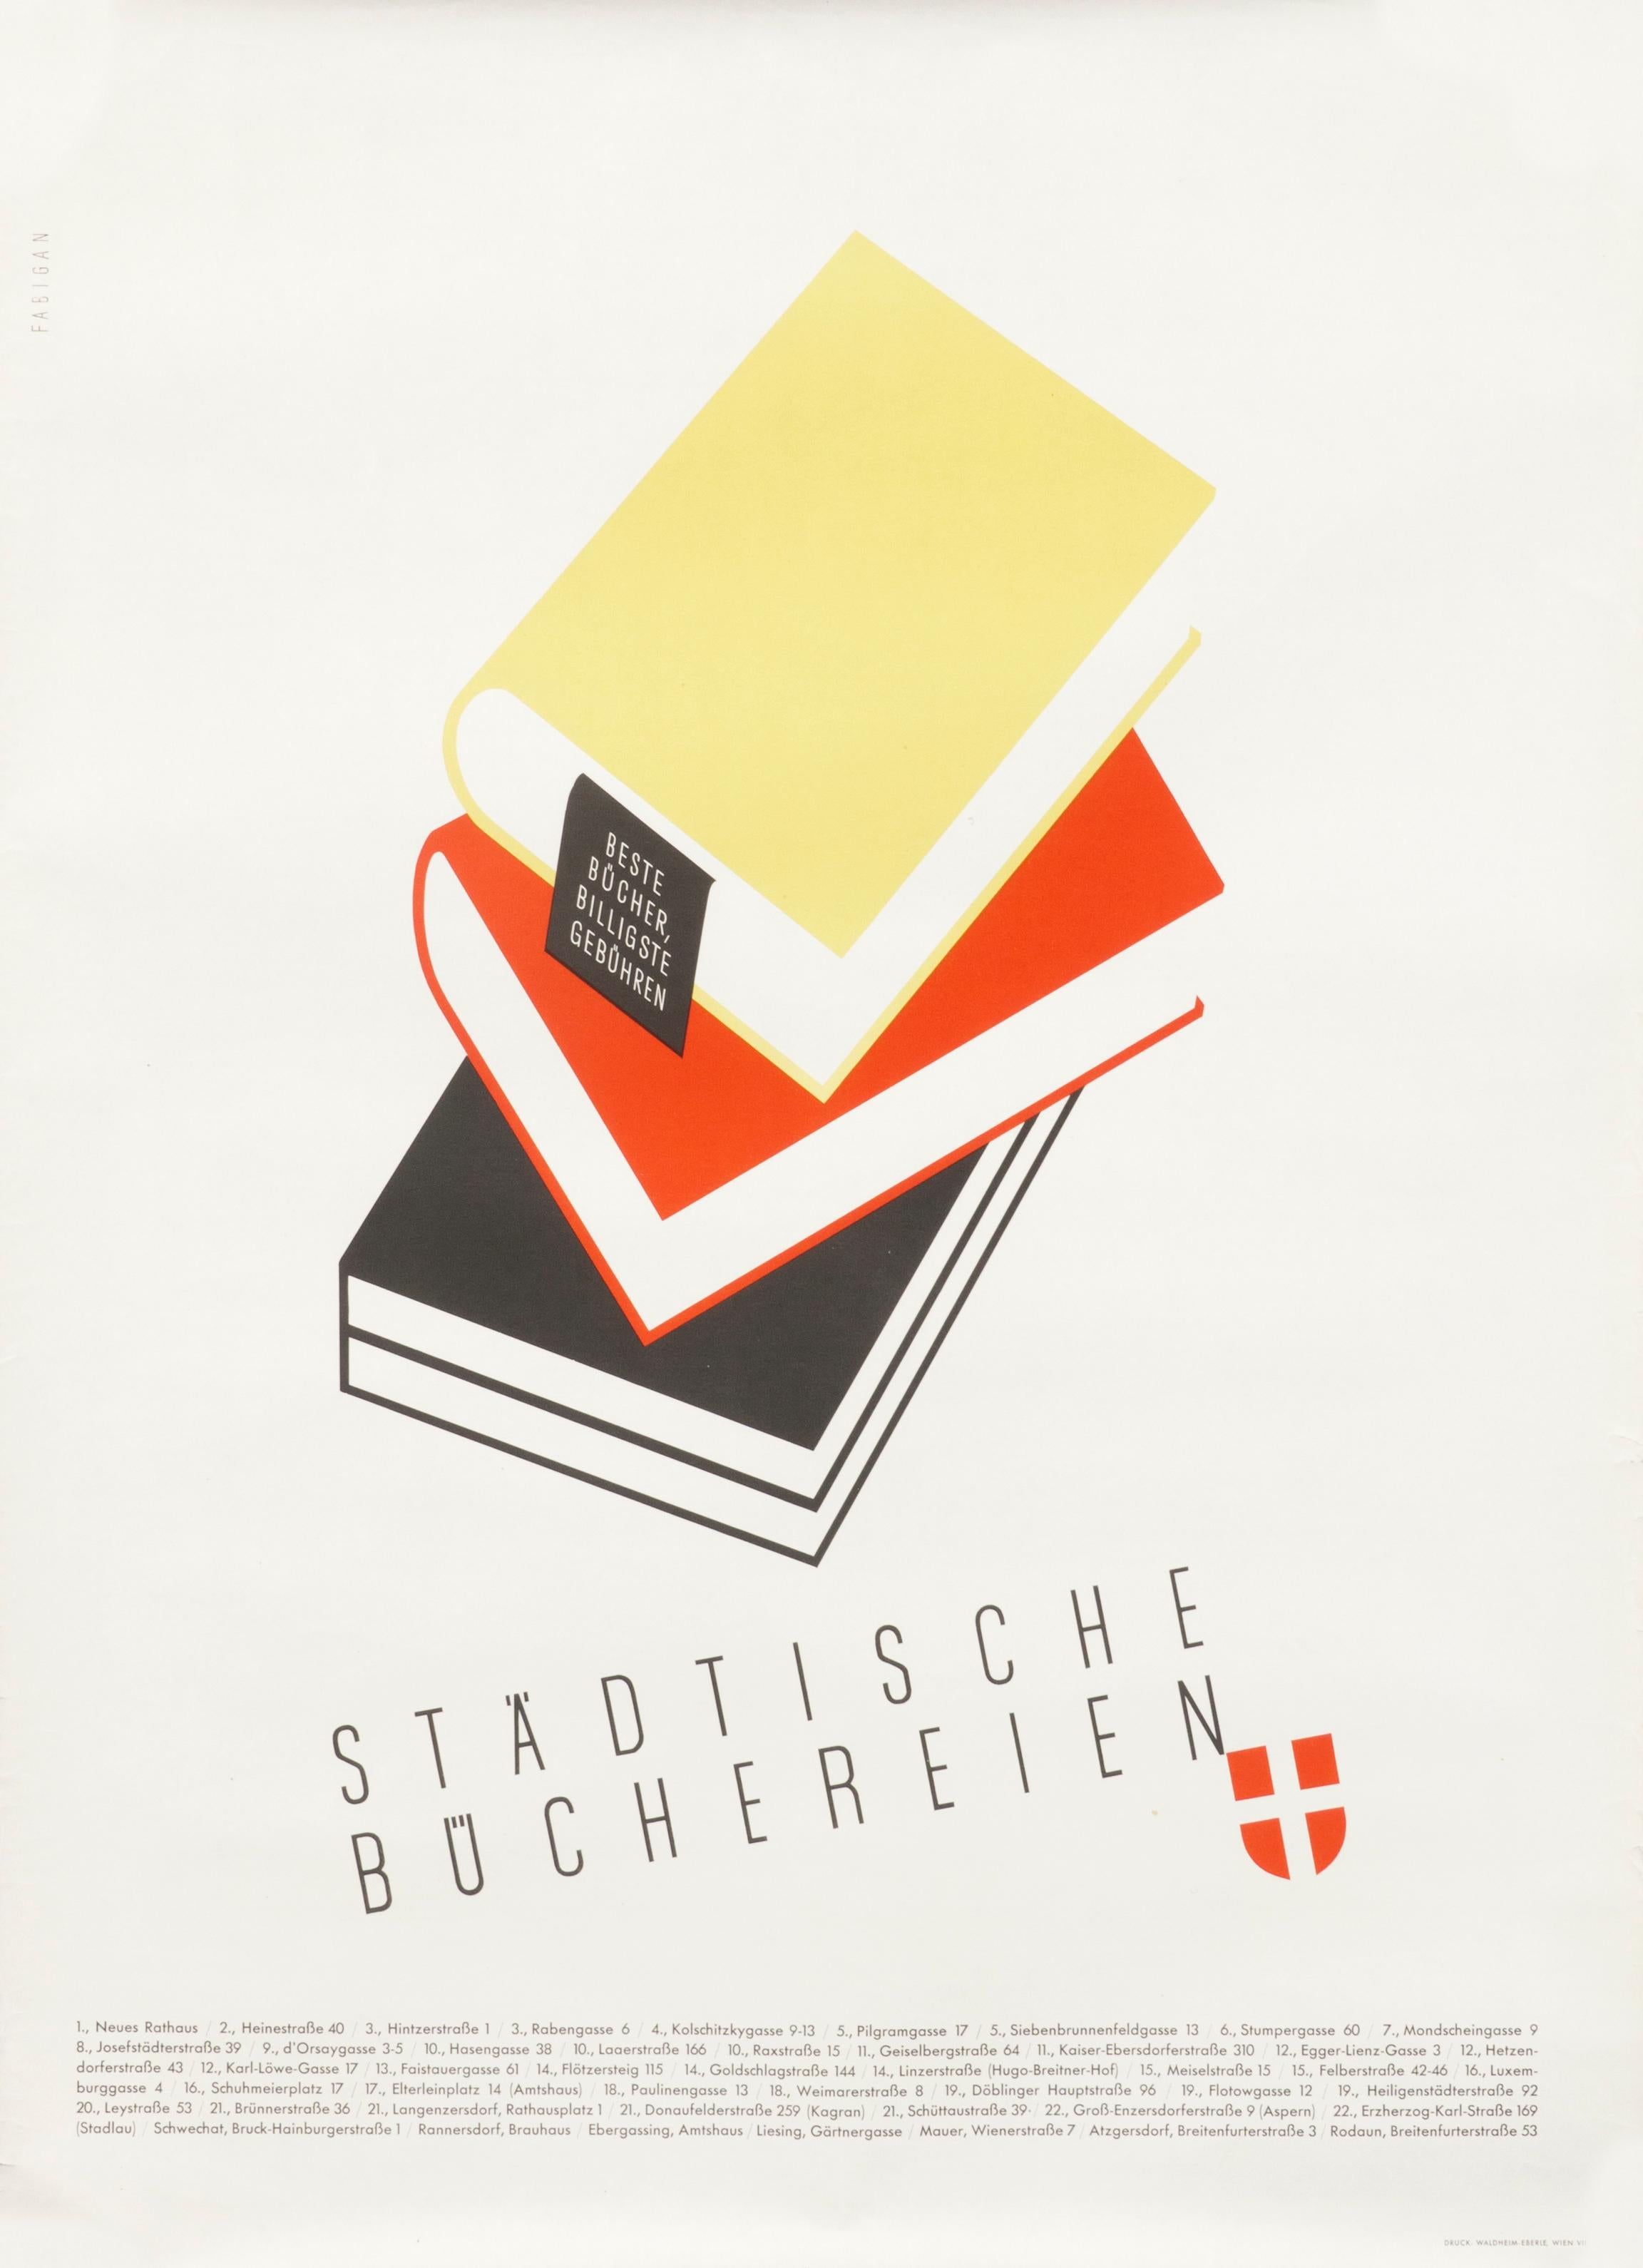 Hans Fabigan Figurative Print - "Stadtische Buchereien" Austrian Municipal Library Original Vintage Poster